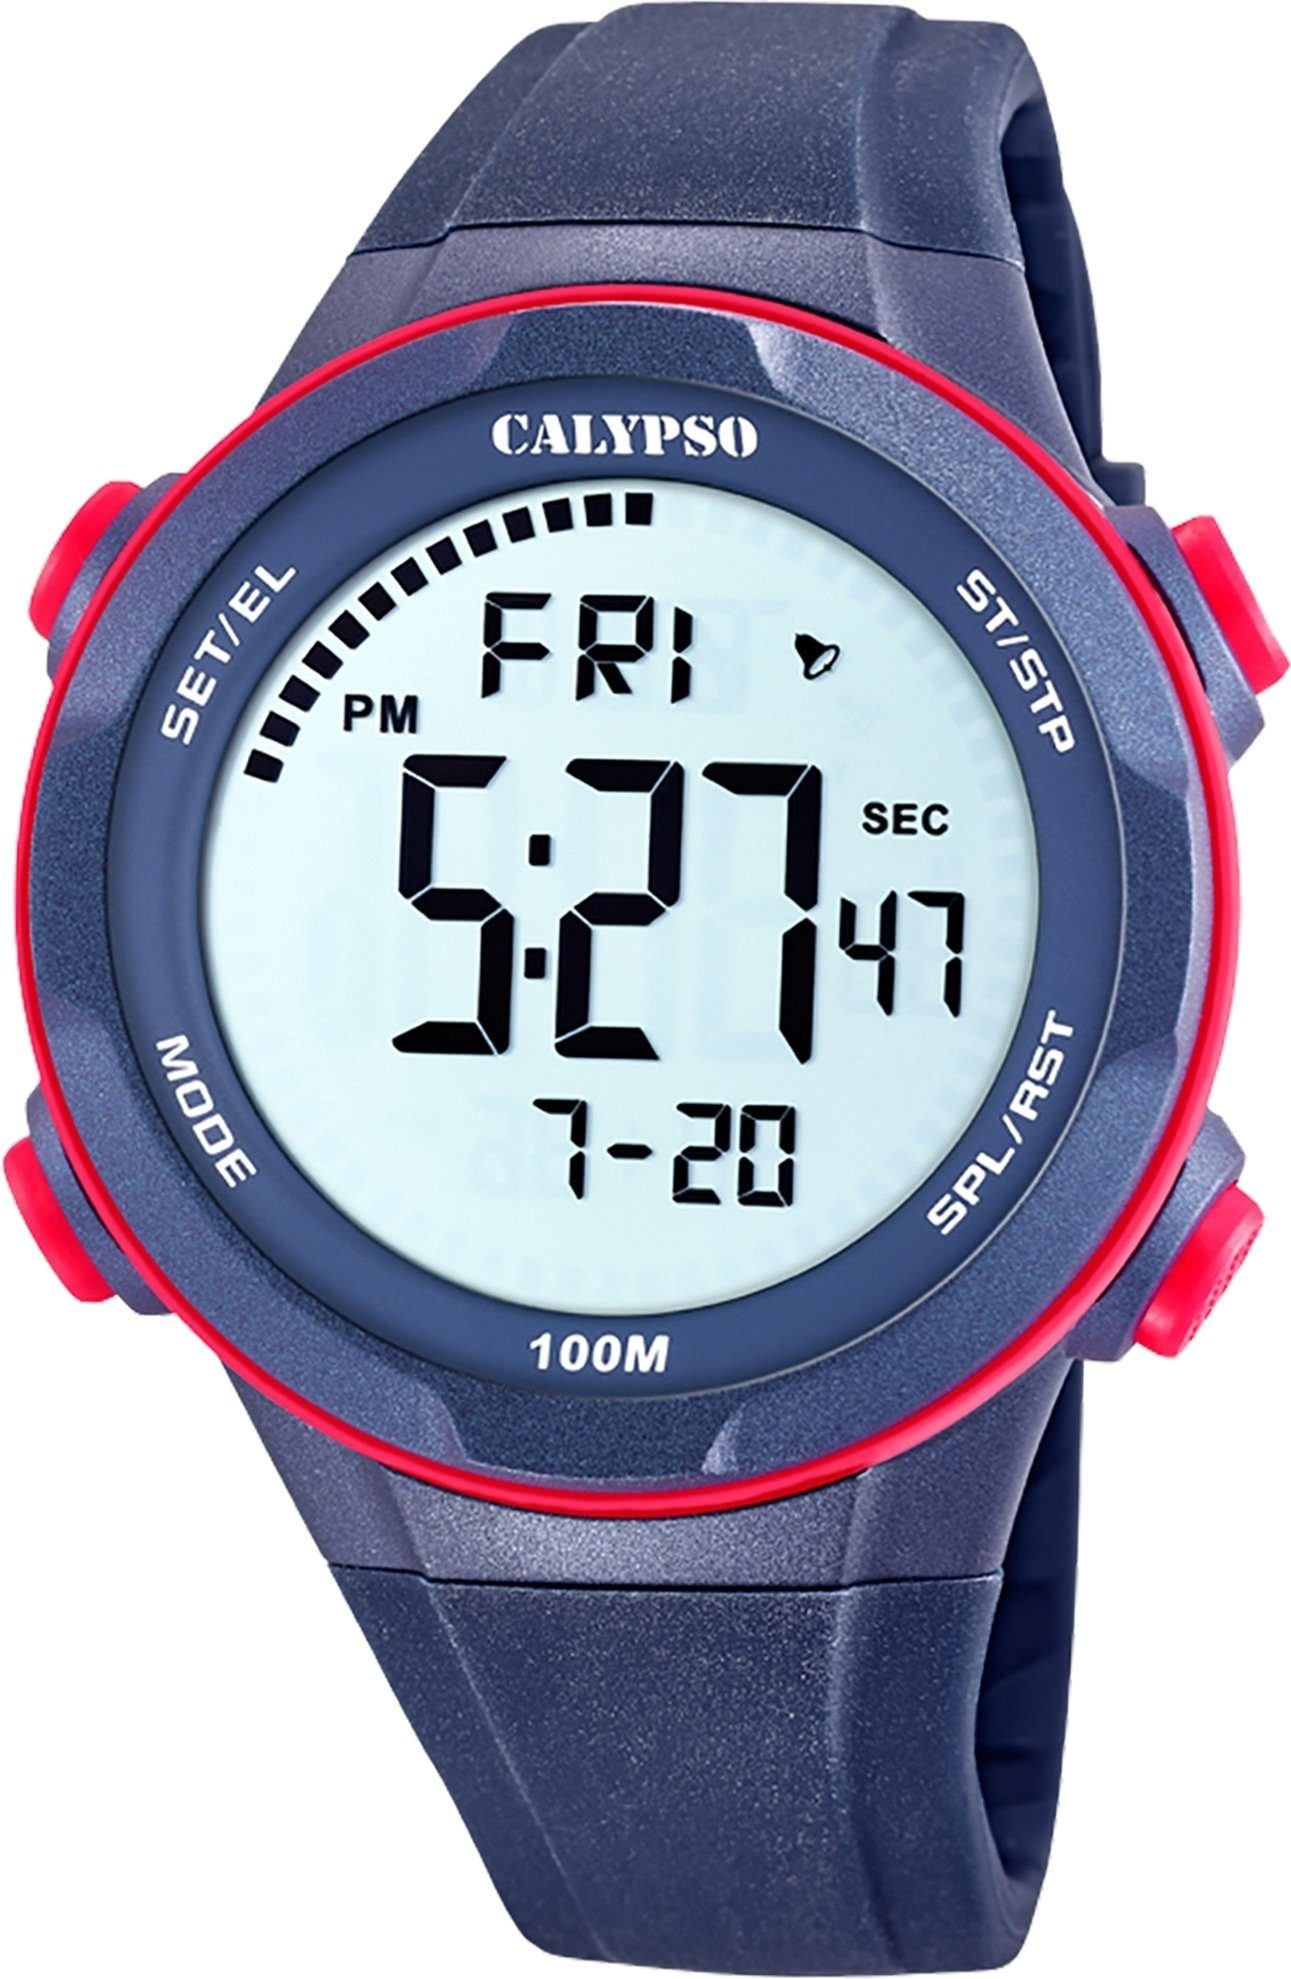 CALYPSO WATCHES Digitaluhr Calypso Kunststoffarmband blau, rund, Herren, Armbanduhr Digital, Casual Herren Jugend Jugend Uhr